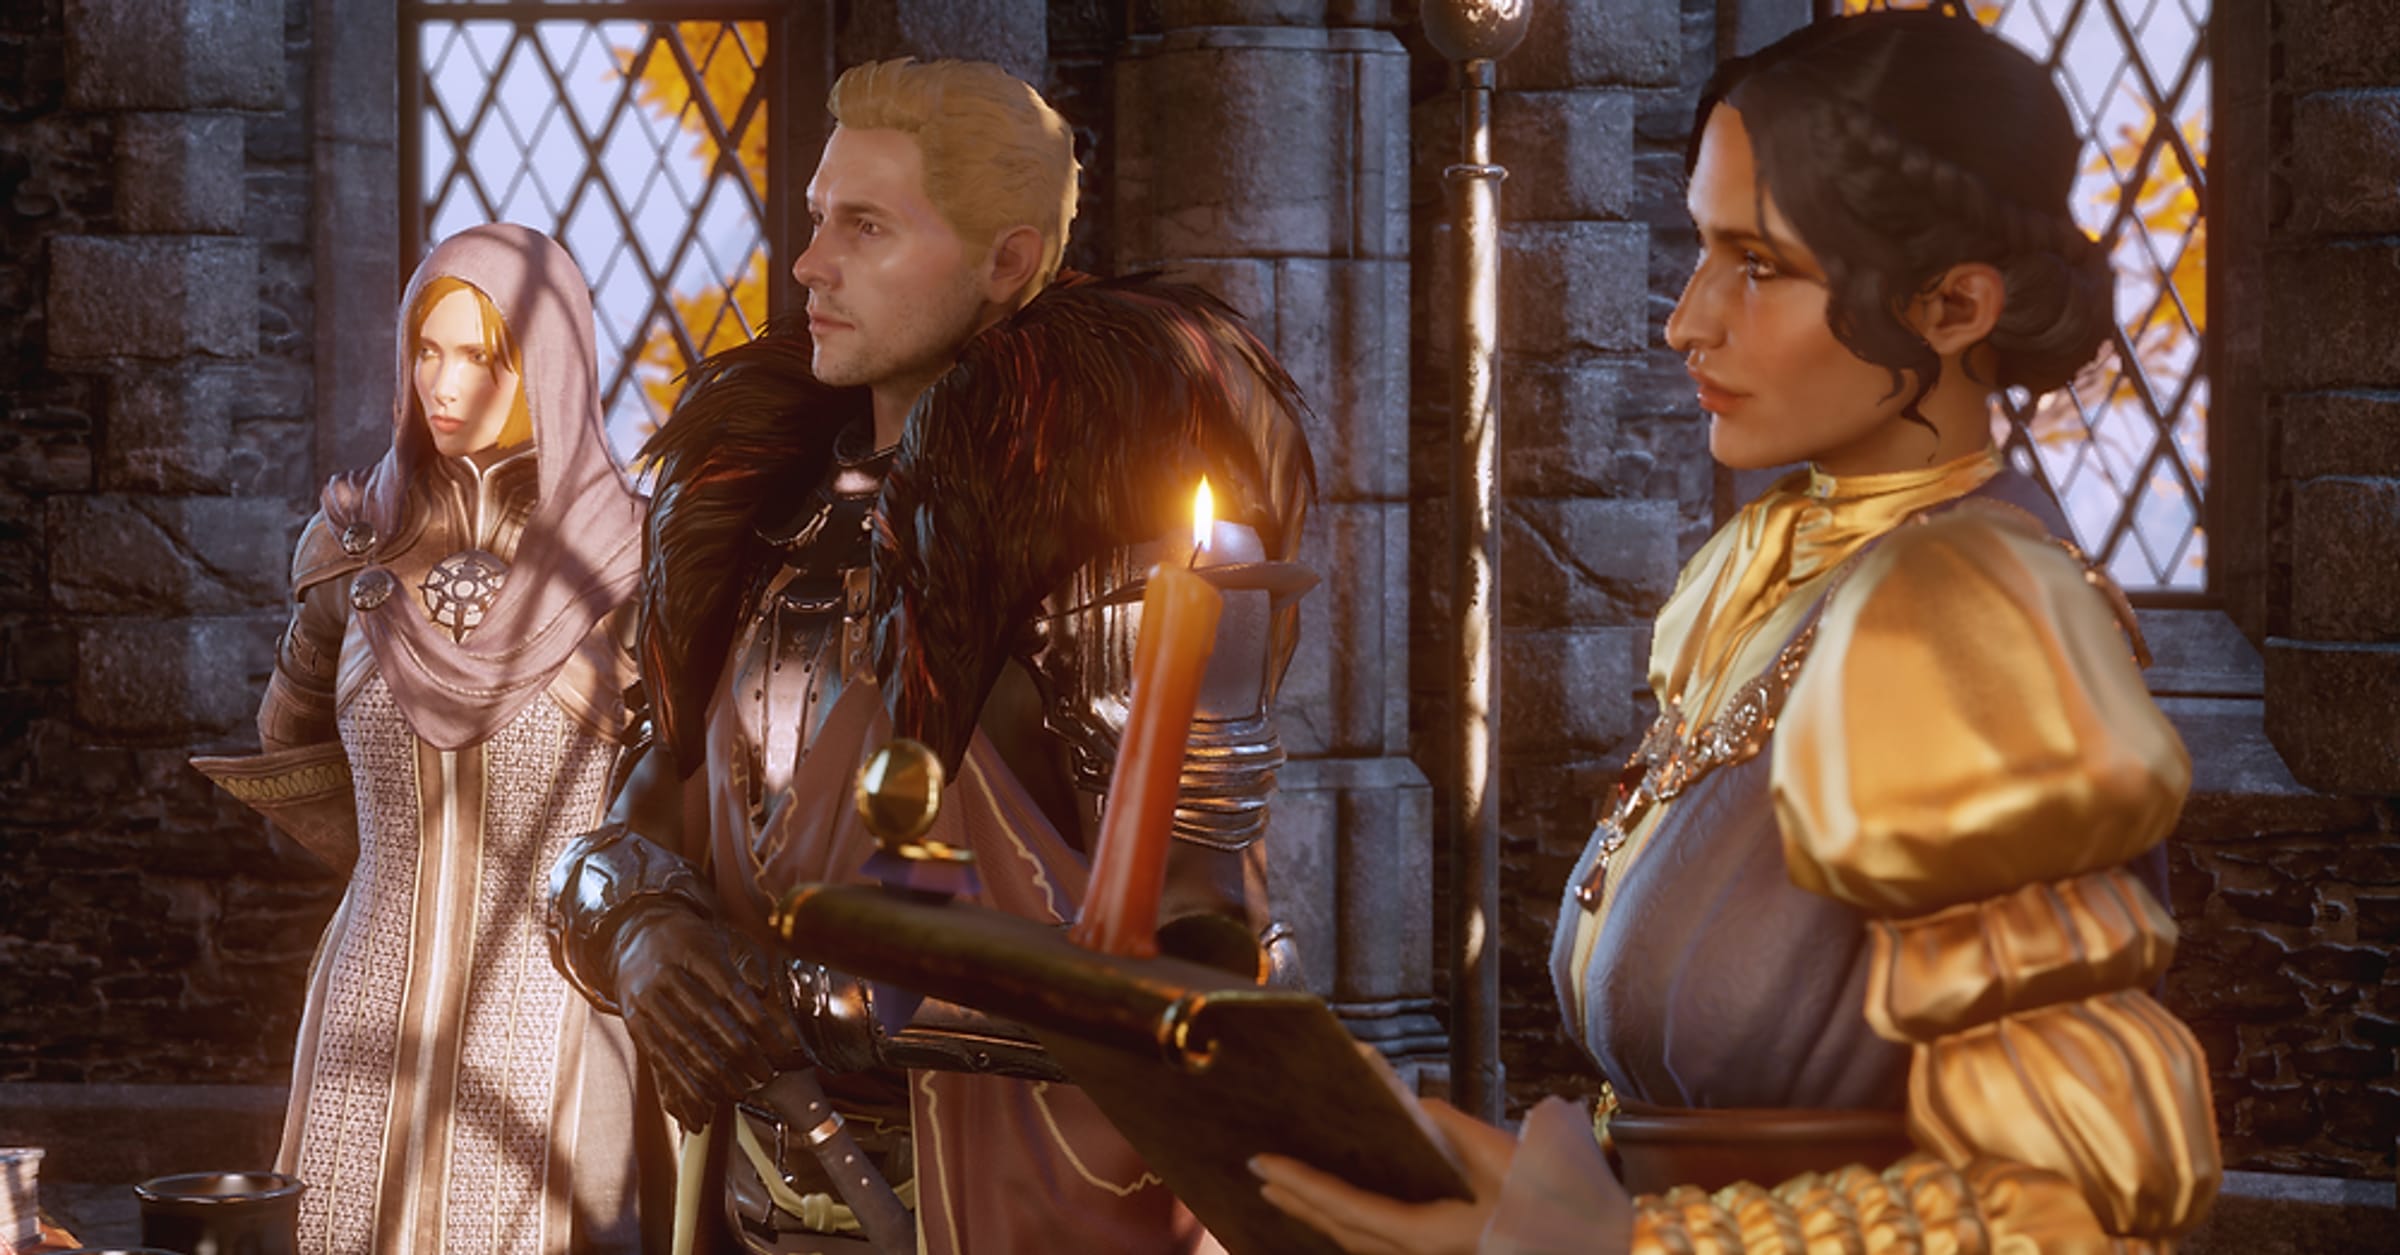 Dragon Age: Origins – Playable Characters – The Companions